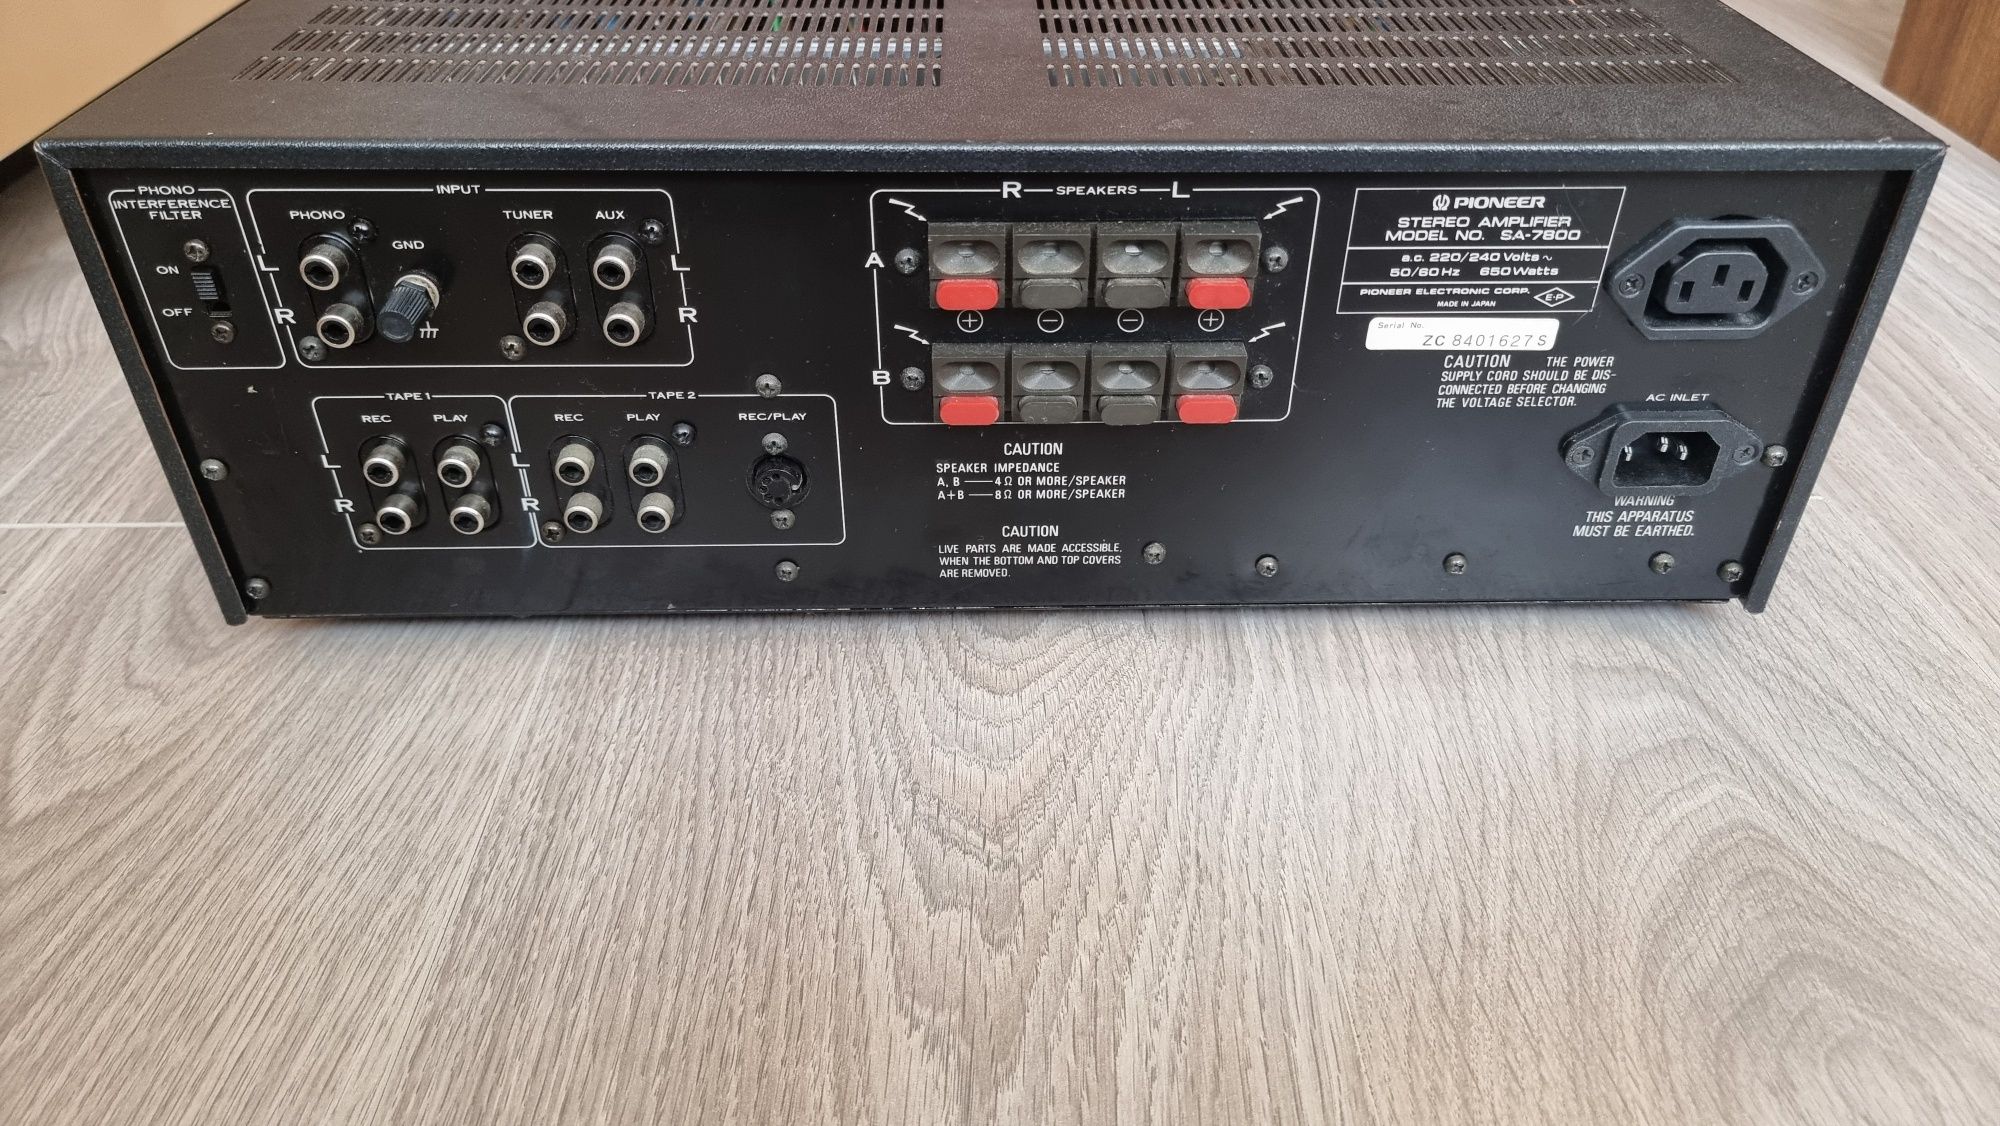 Amplificator Pioneer SA-7800